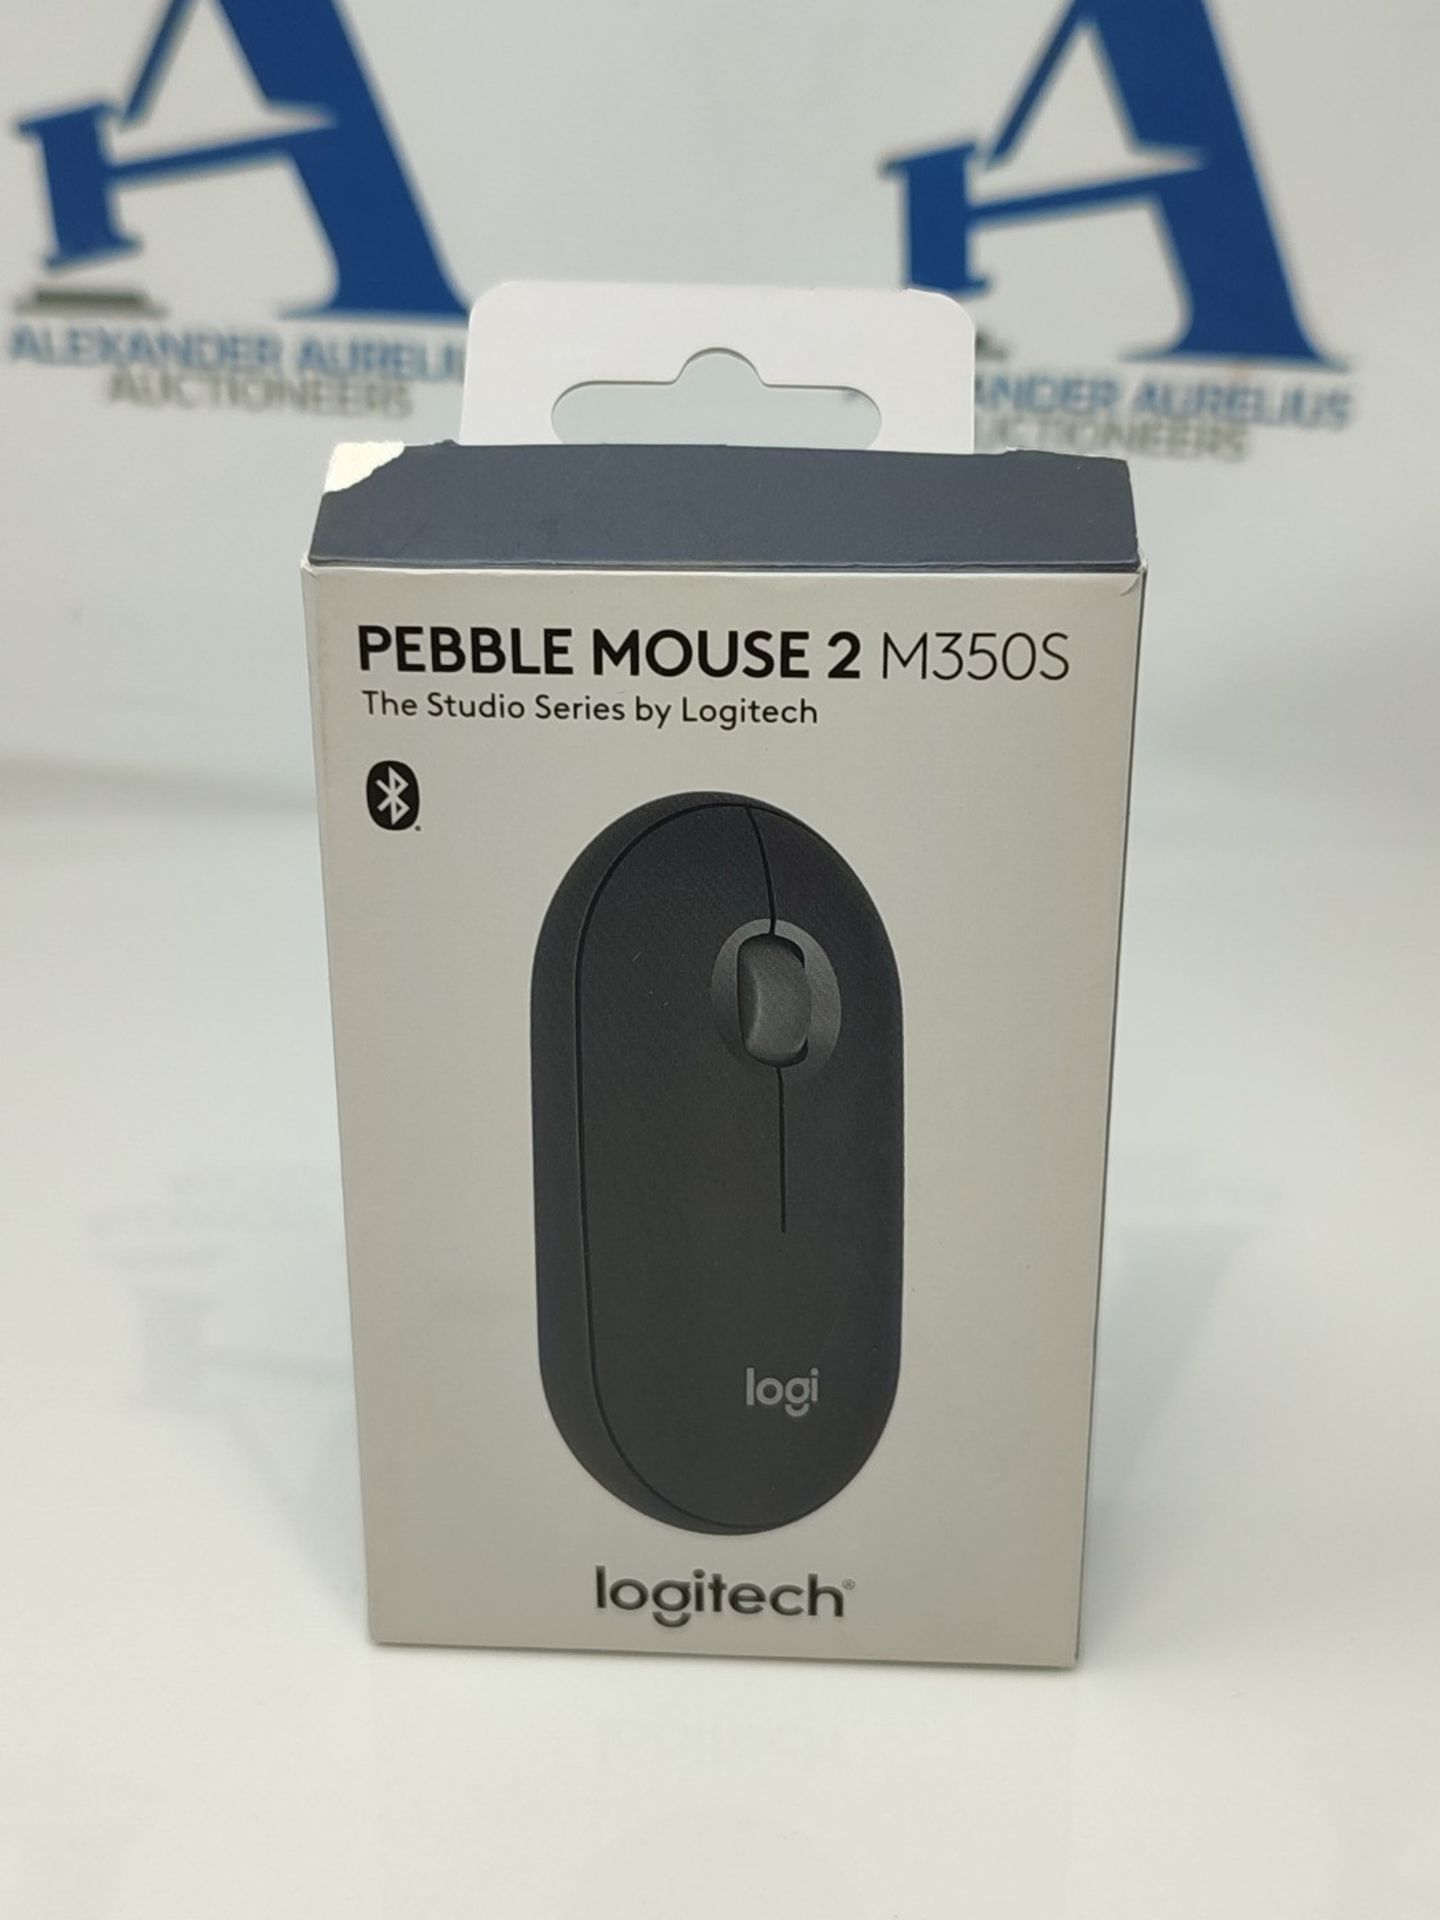 Logitech Pebble Mouse 2 M350s is a wireless Bluetooth mouse that is slim, portable, li